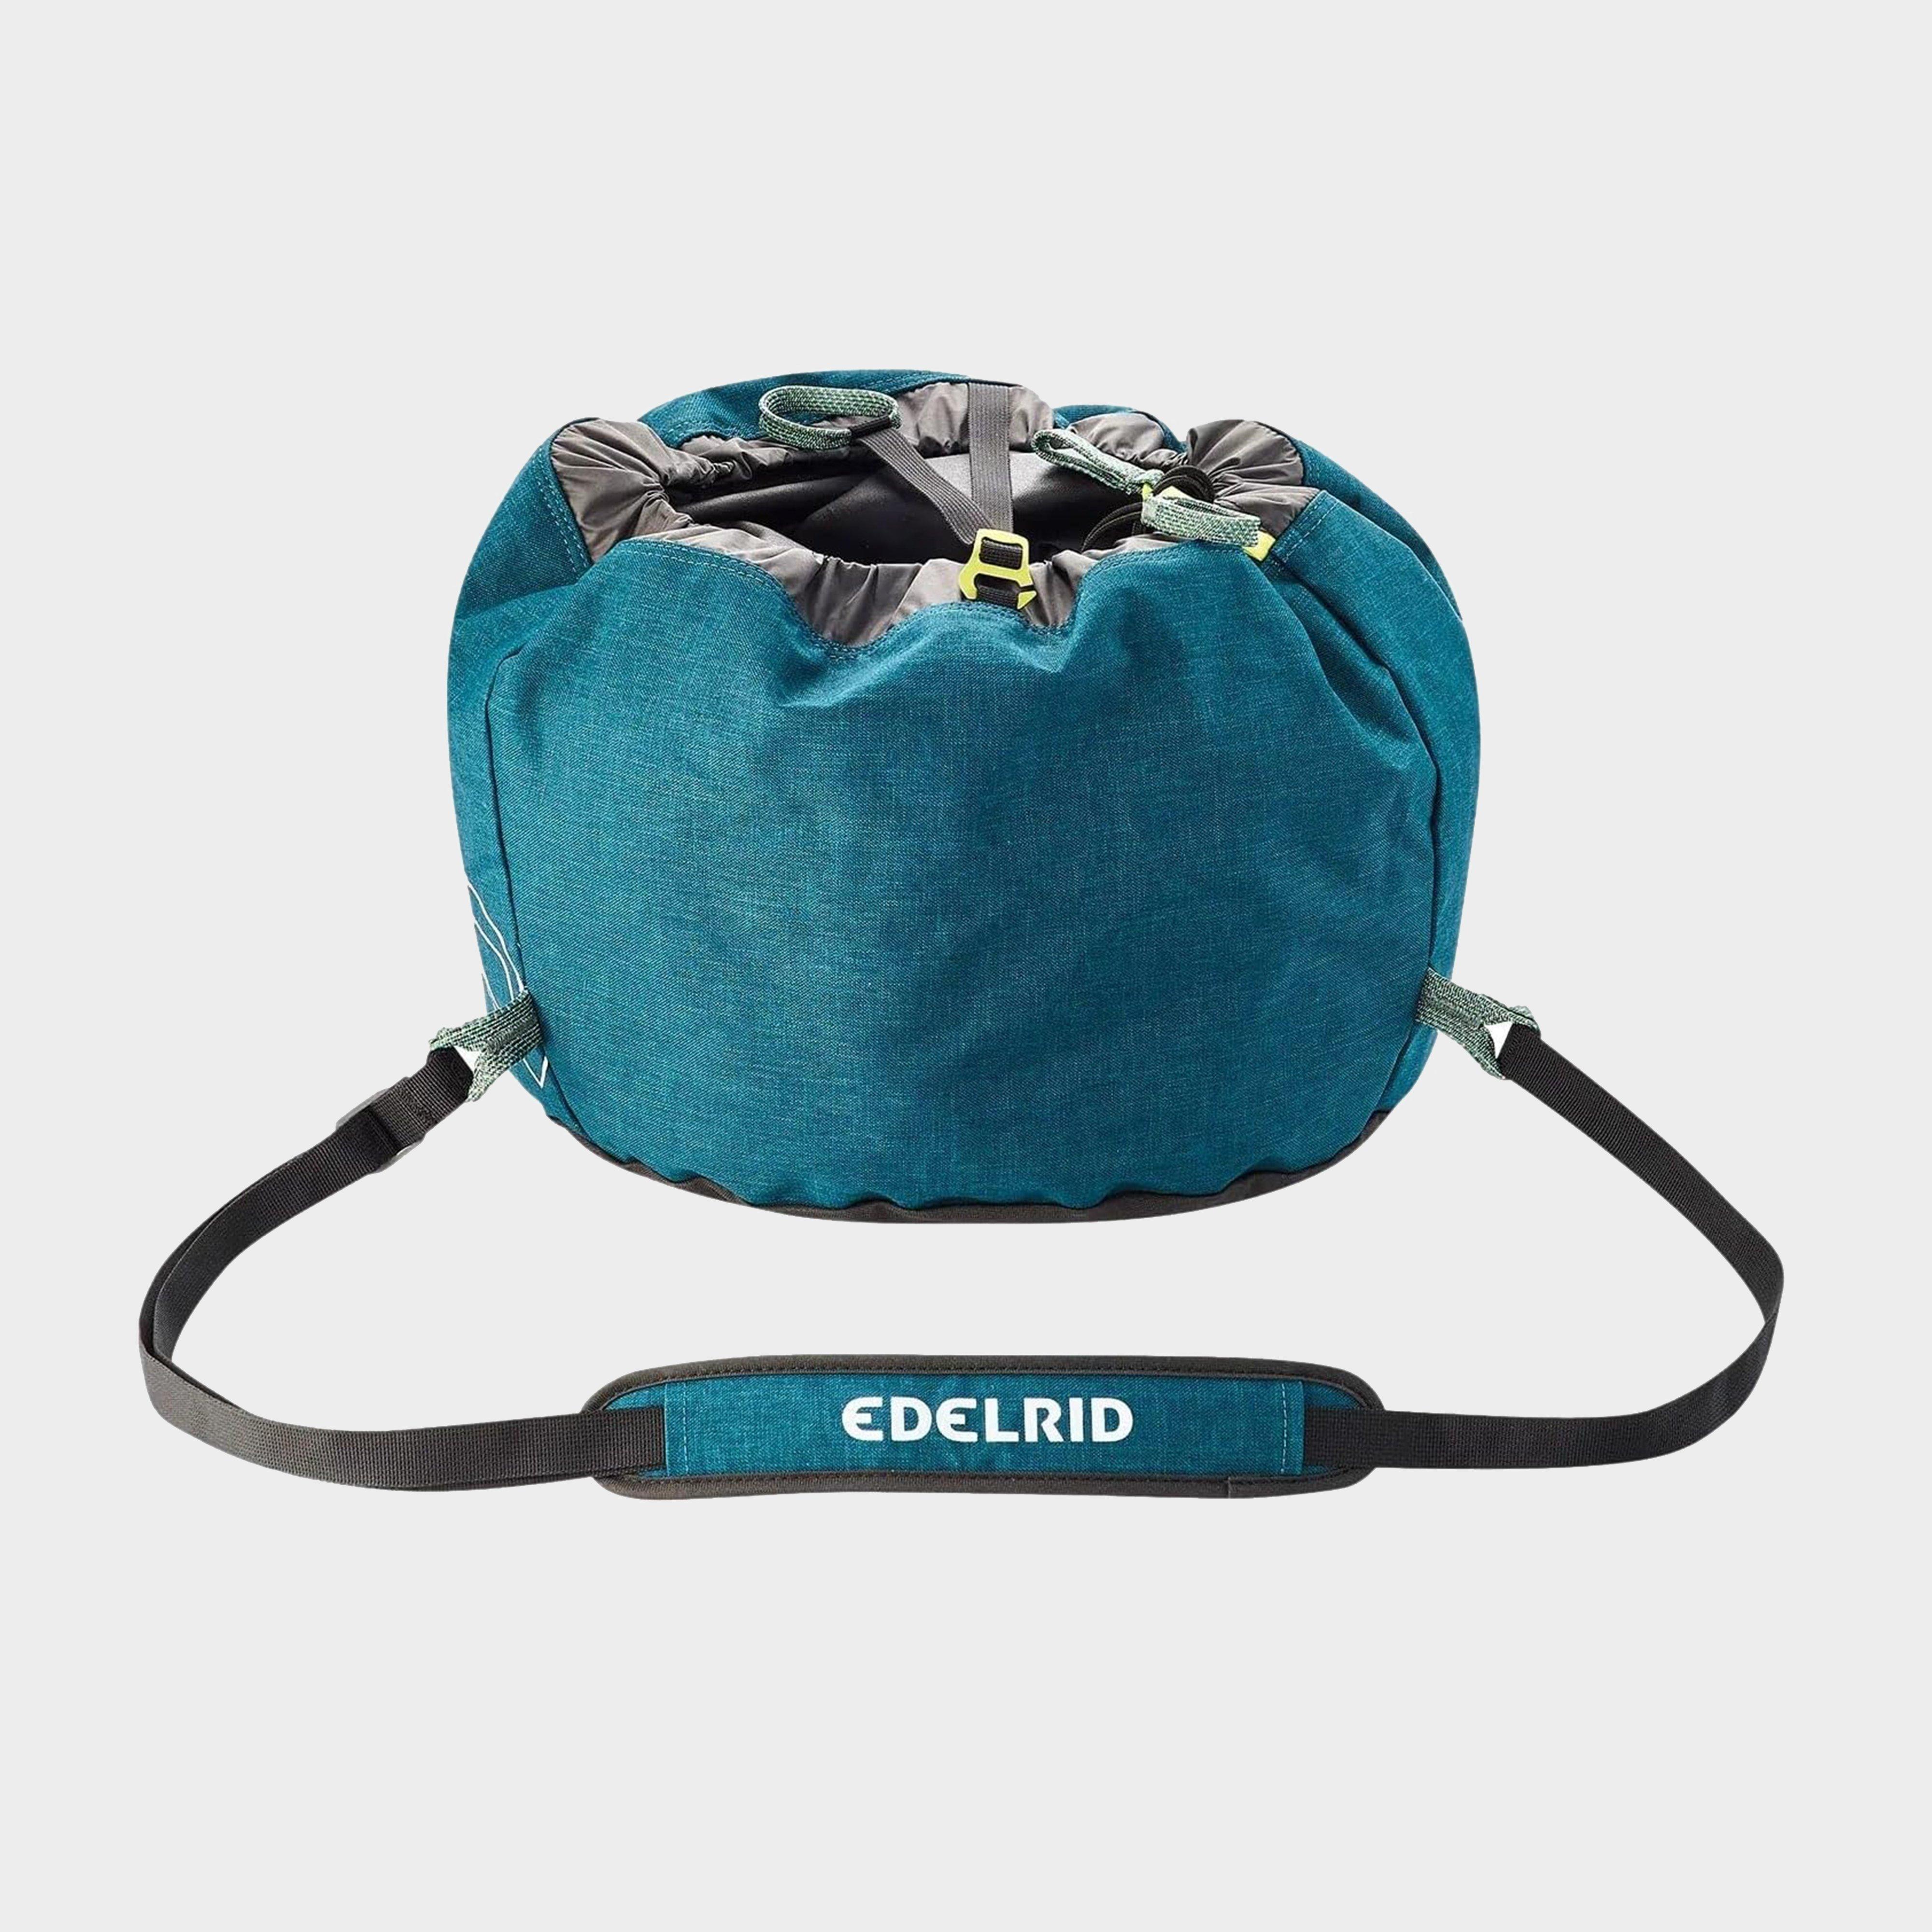  Edelrid Caddy Rope Bag, Blue